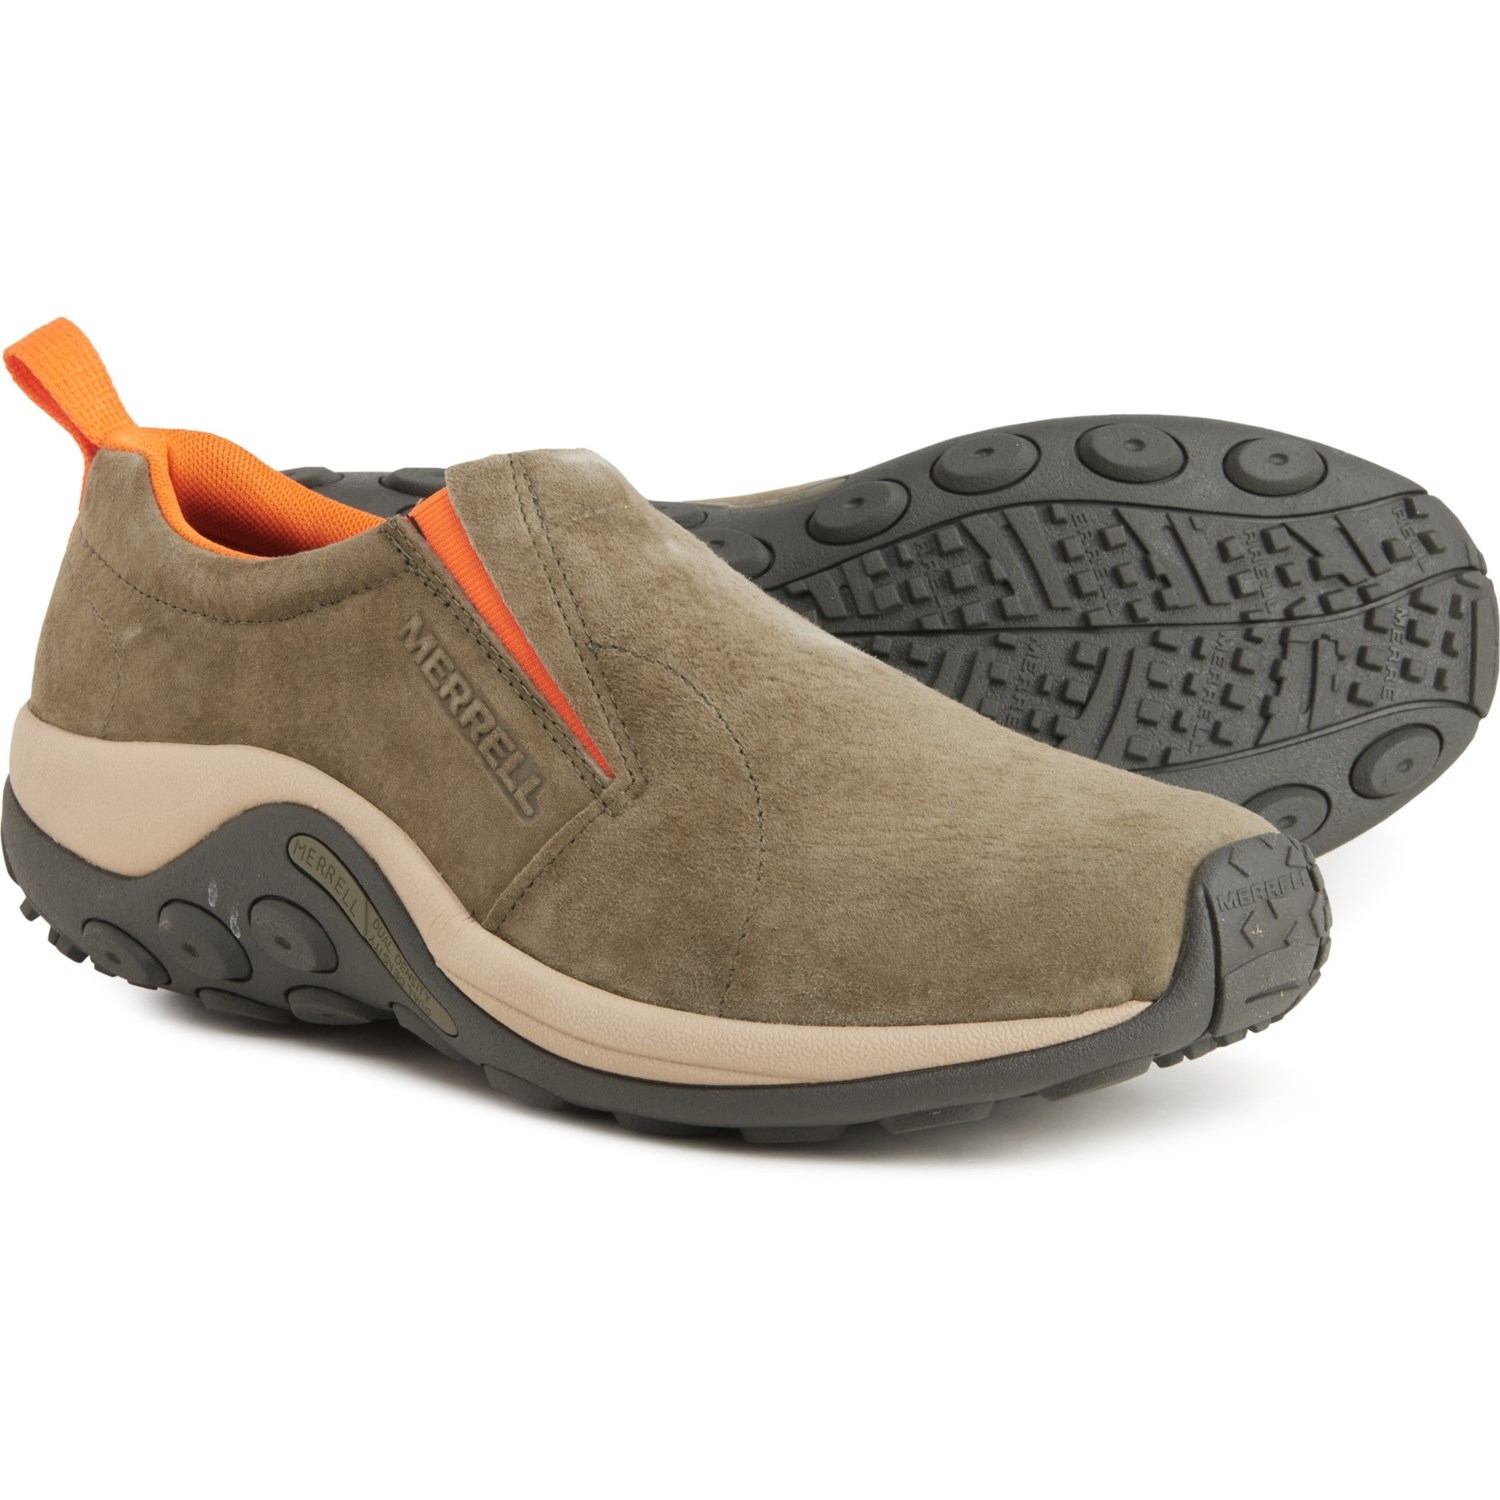 Merrell Jungle Moc Shoes (For Men) - Save 28%